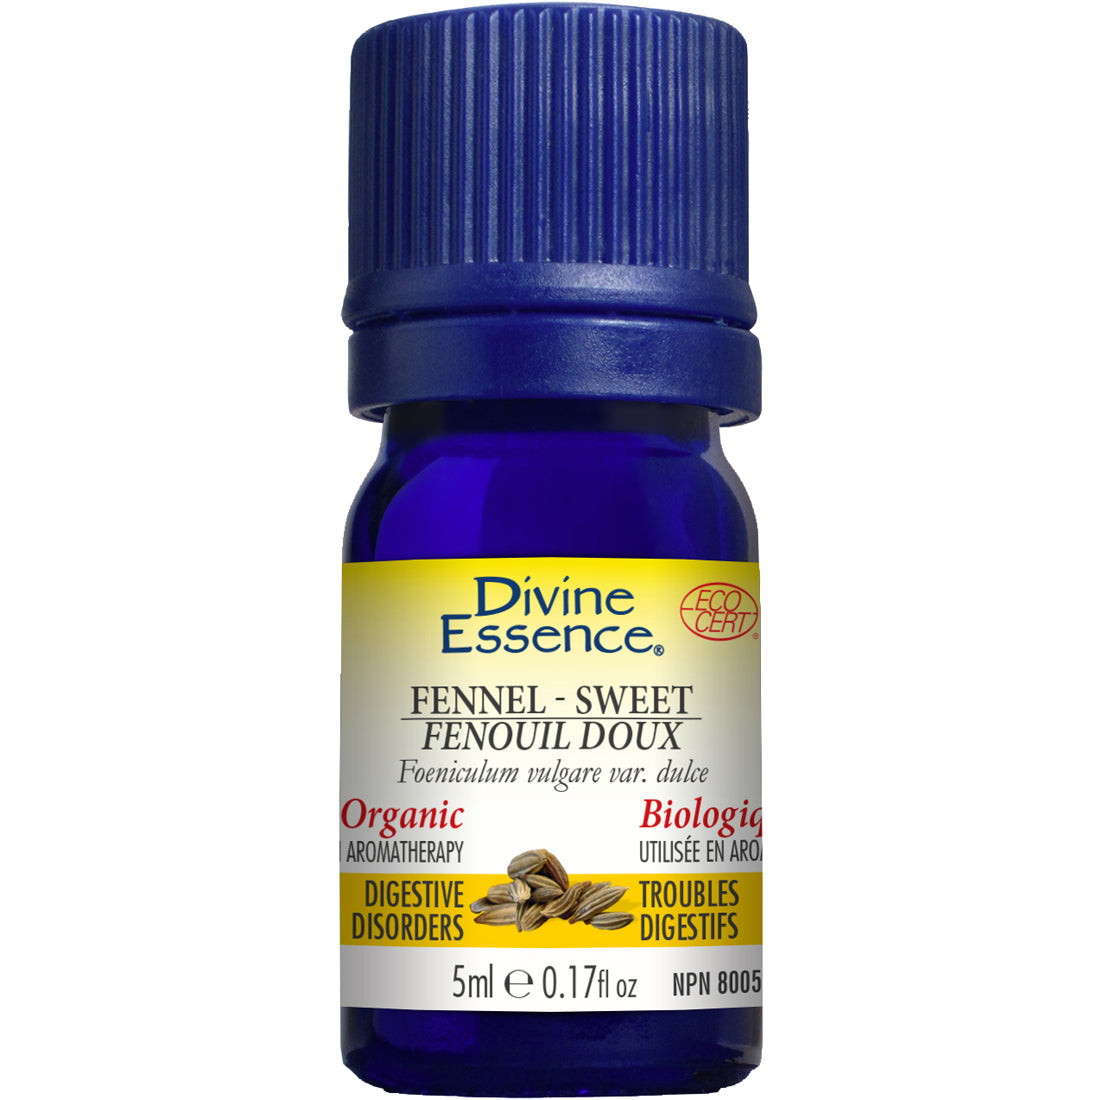 Divine Essence Fennel Sweet, Organic, 5ml